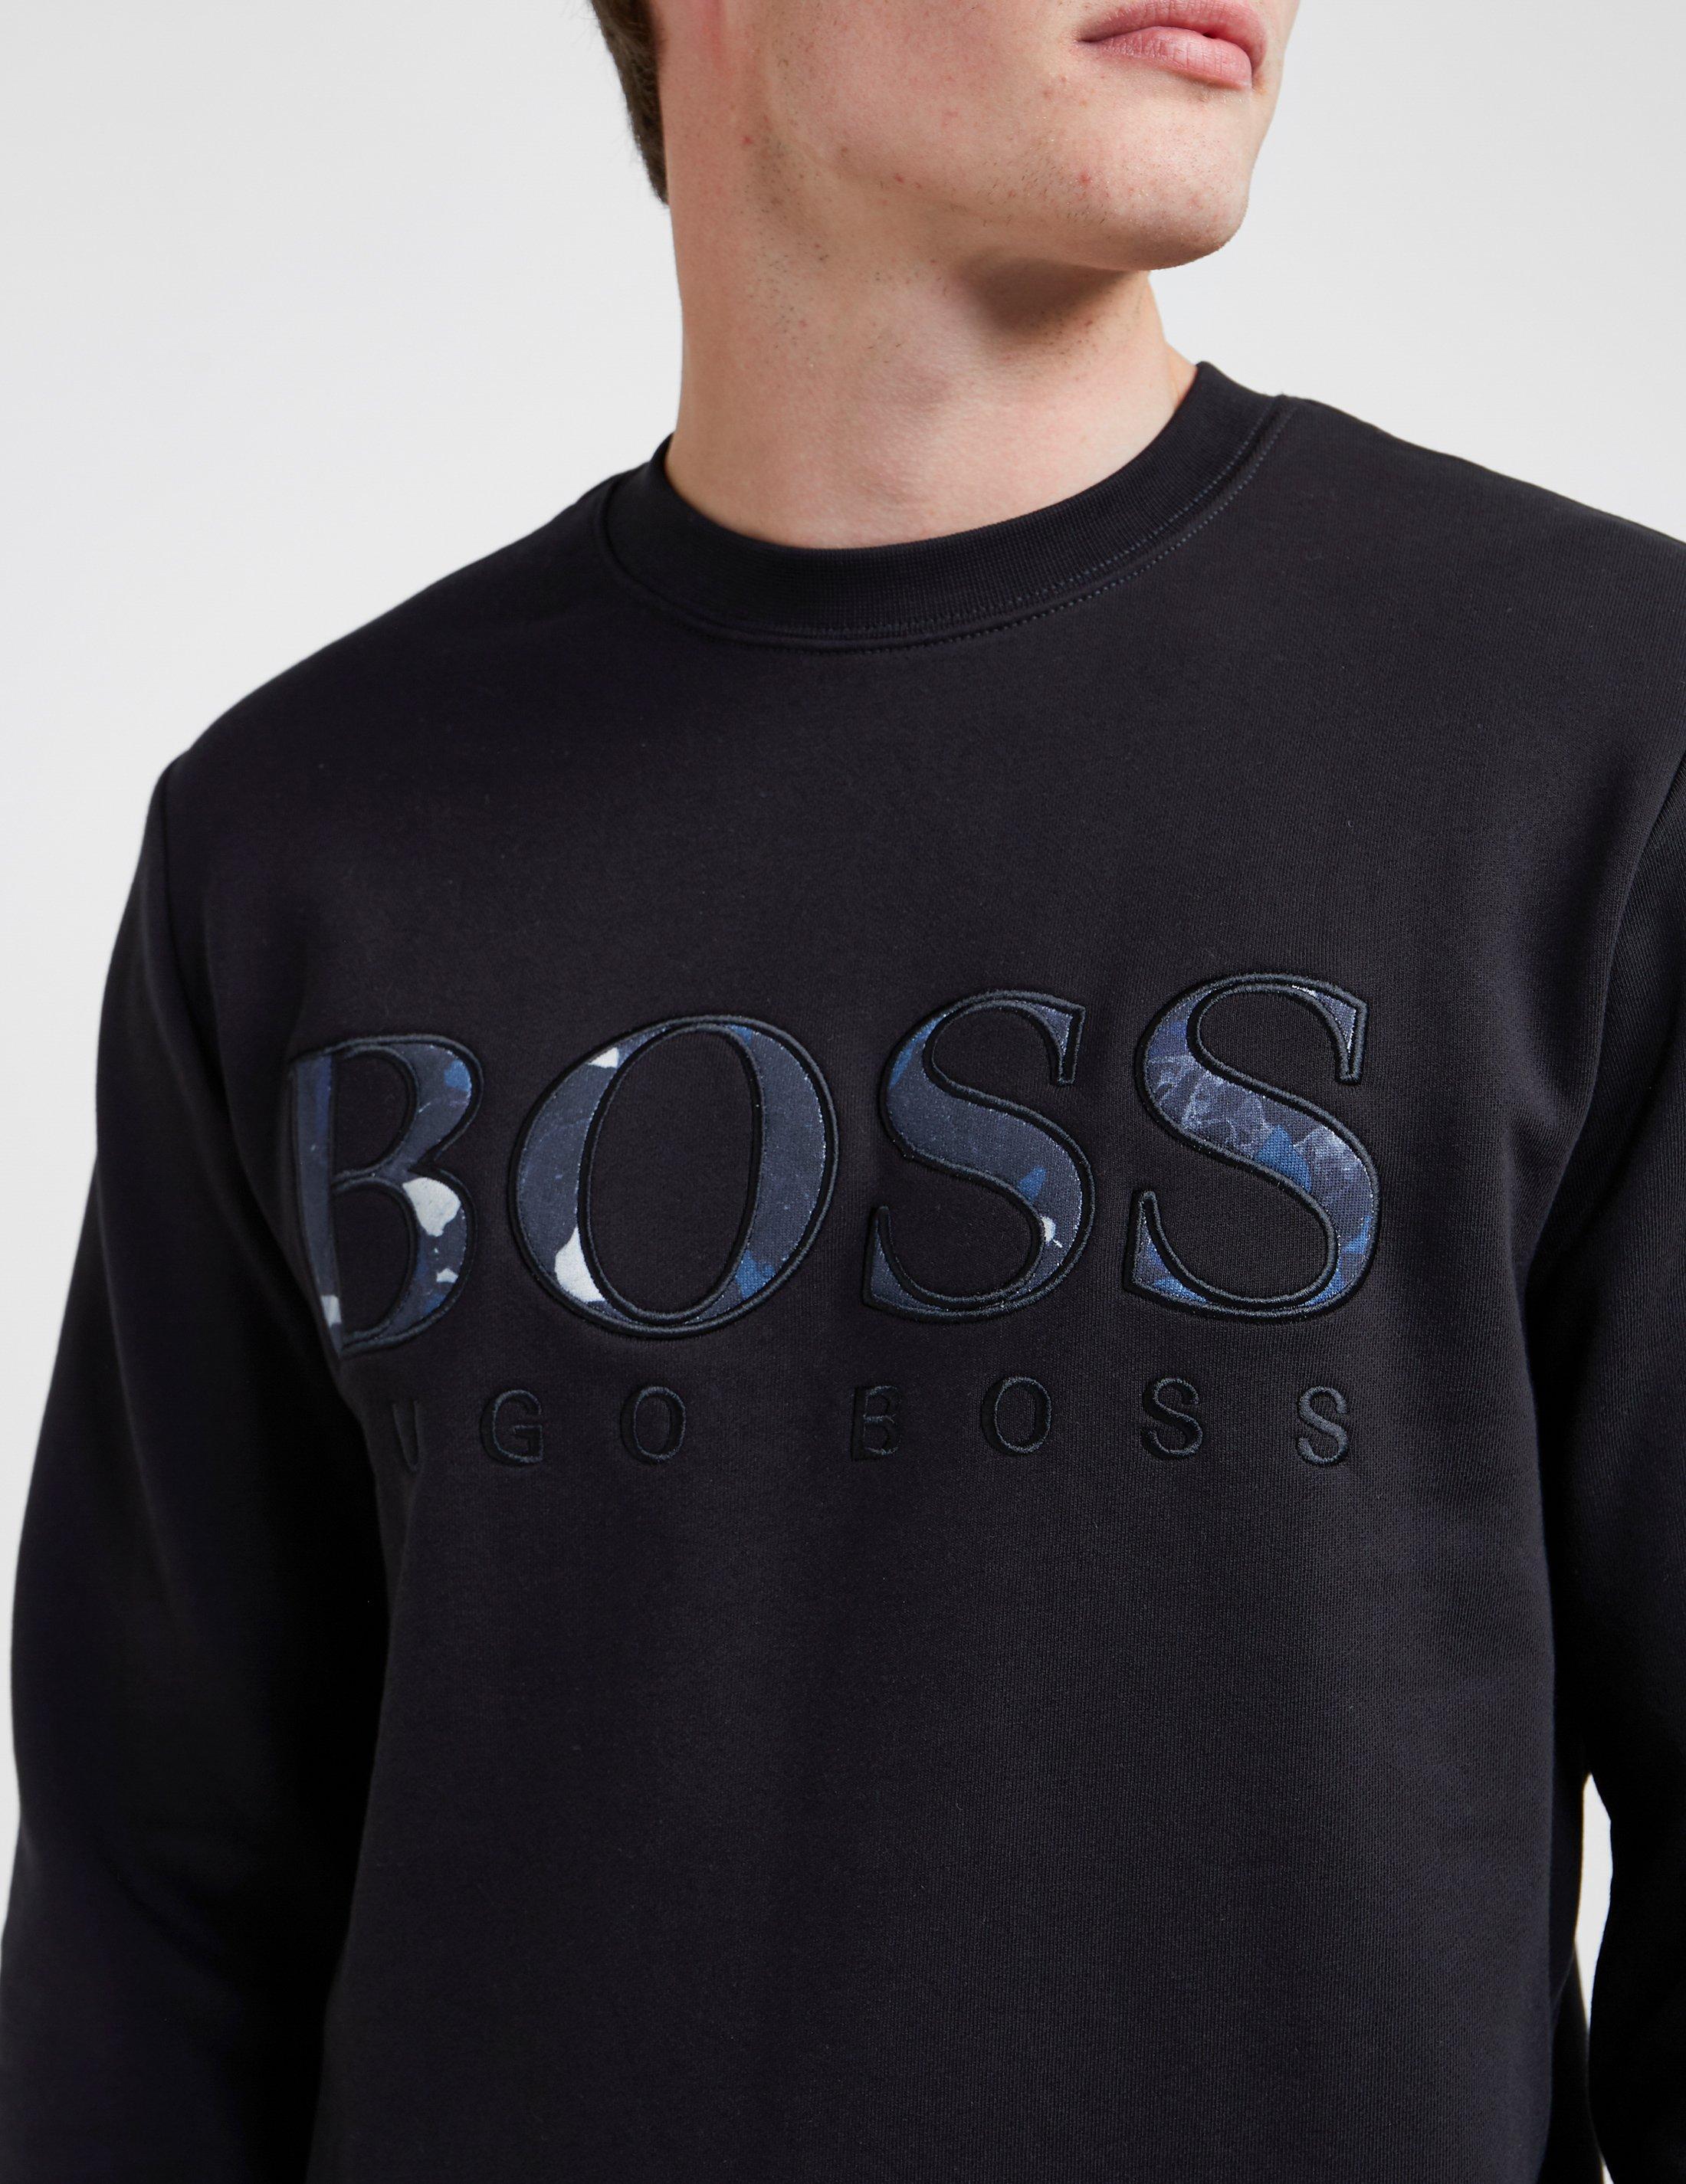 BOSS by HUGO BOSS Wedown Logo Sweatshirt Black/black for Men | Lyst